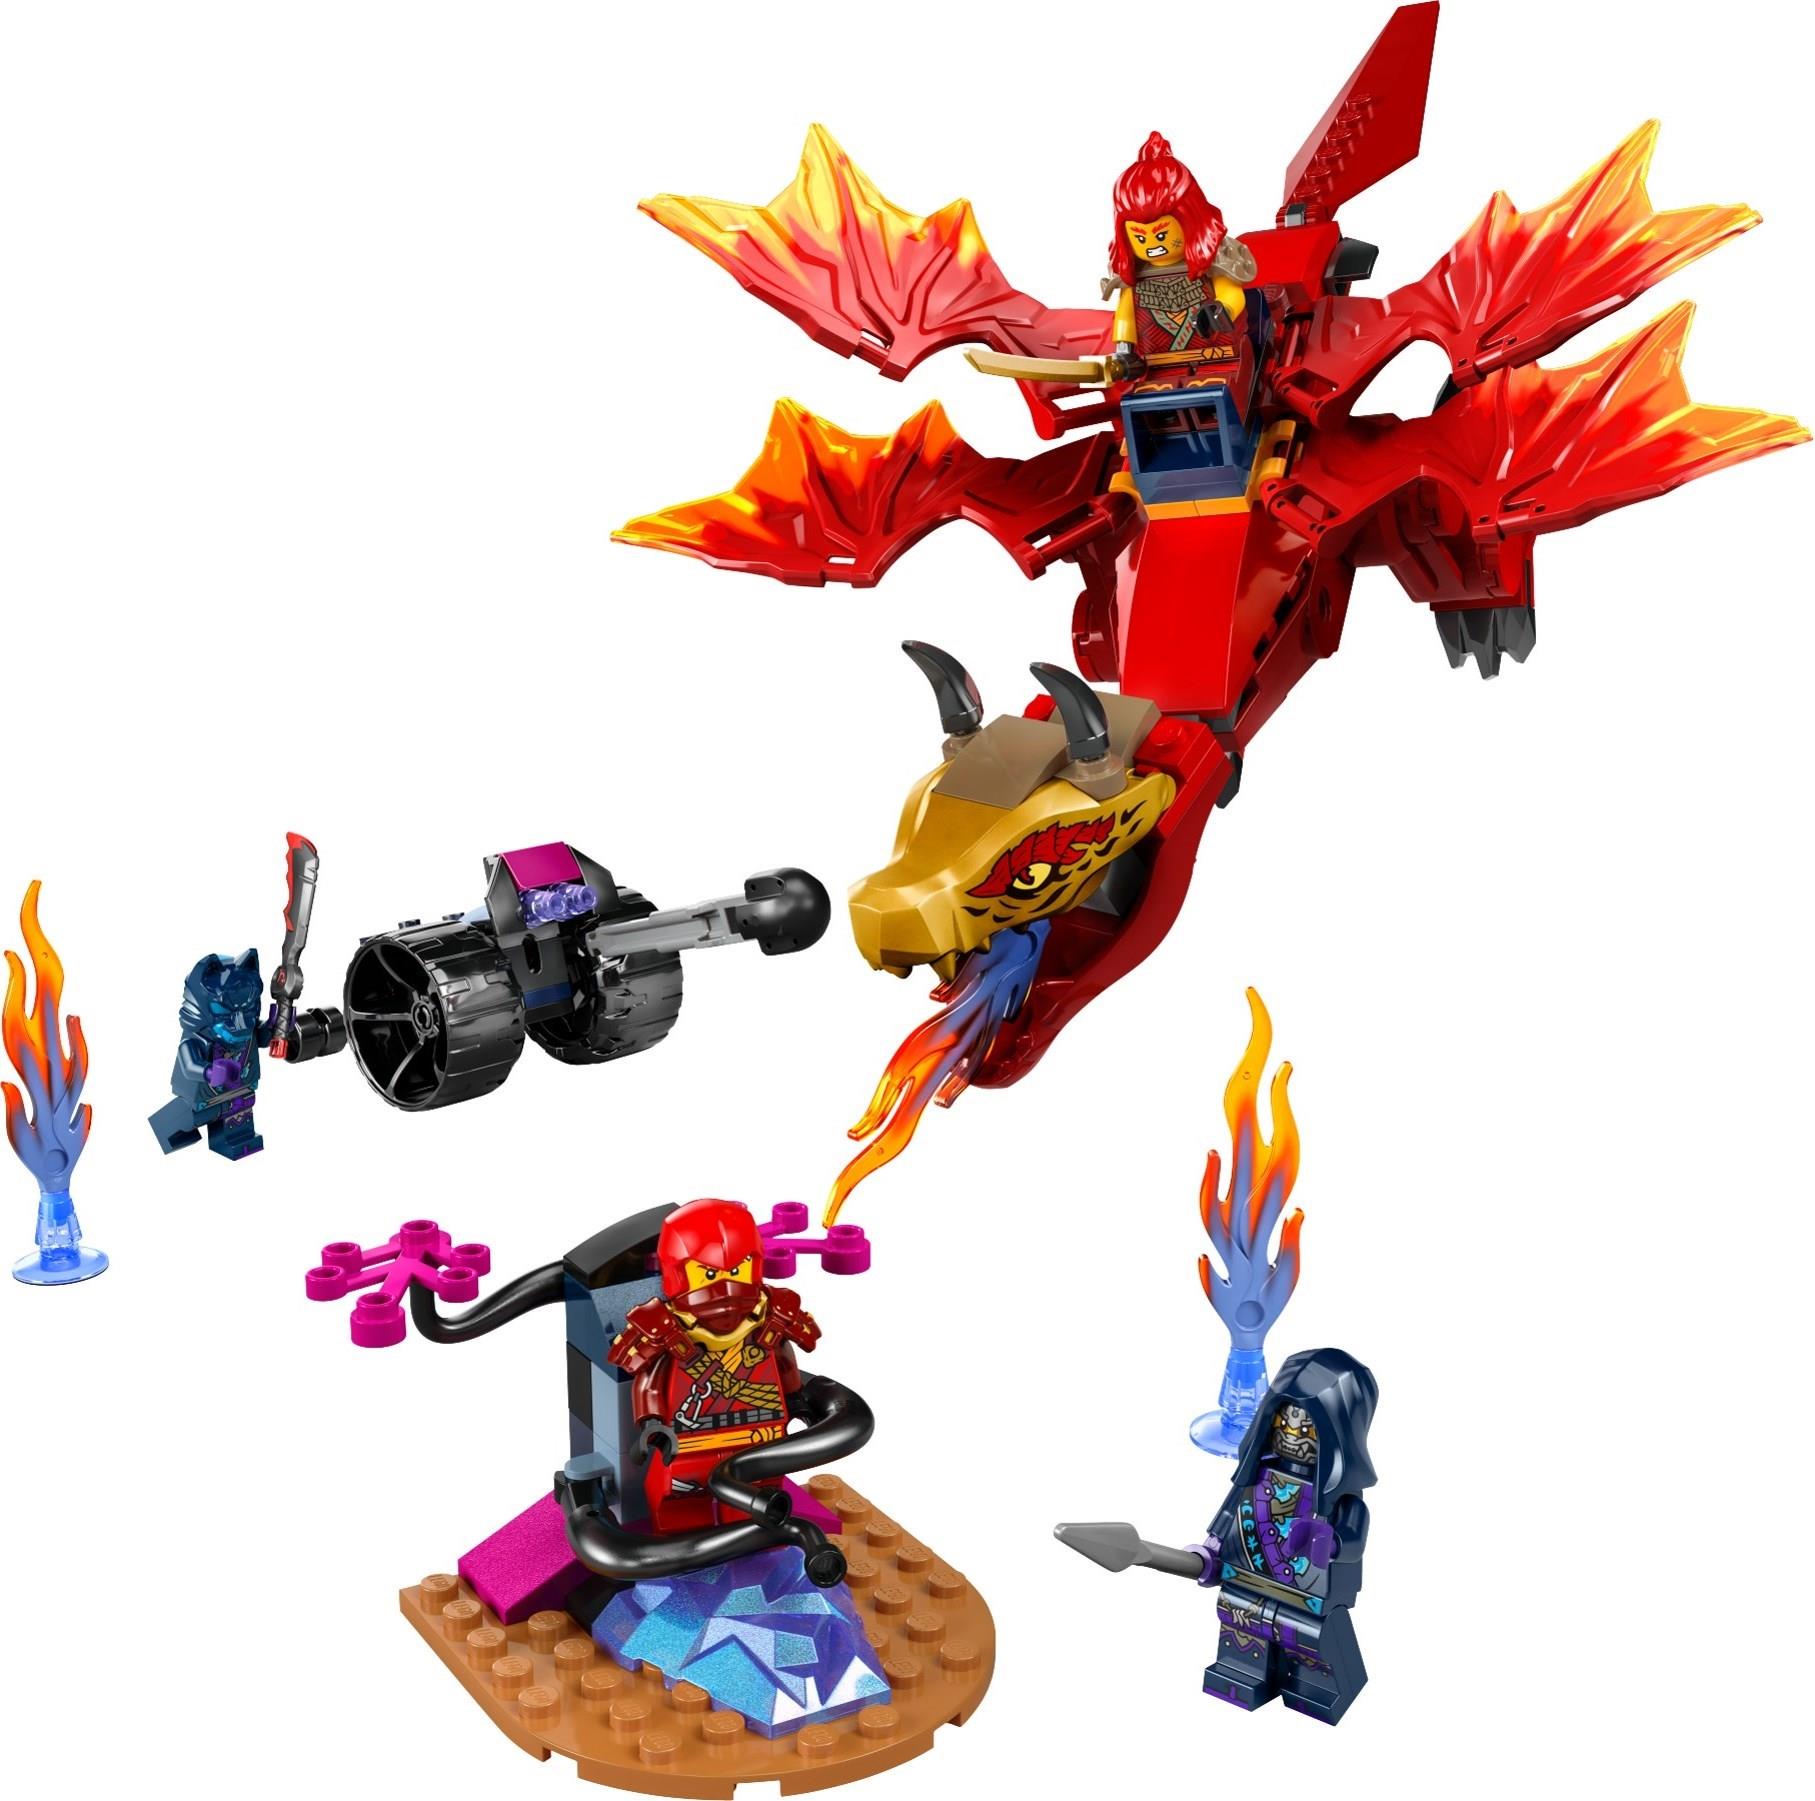 LEGO Reveals New Ninjago: Dragons Rising Sets and a TV Series